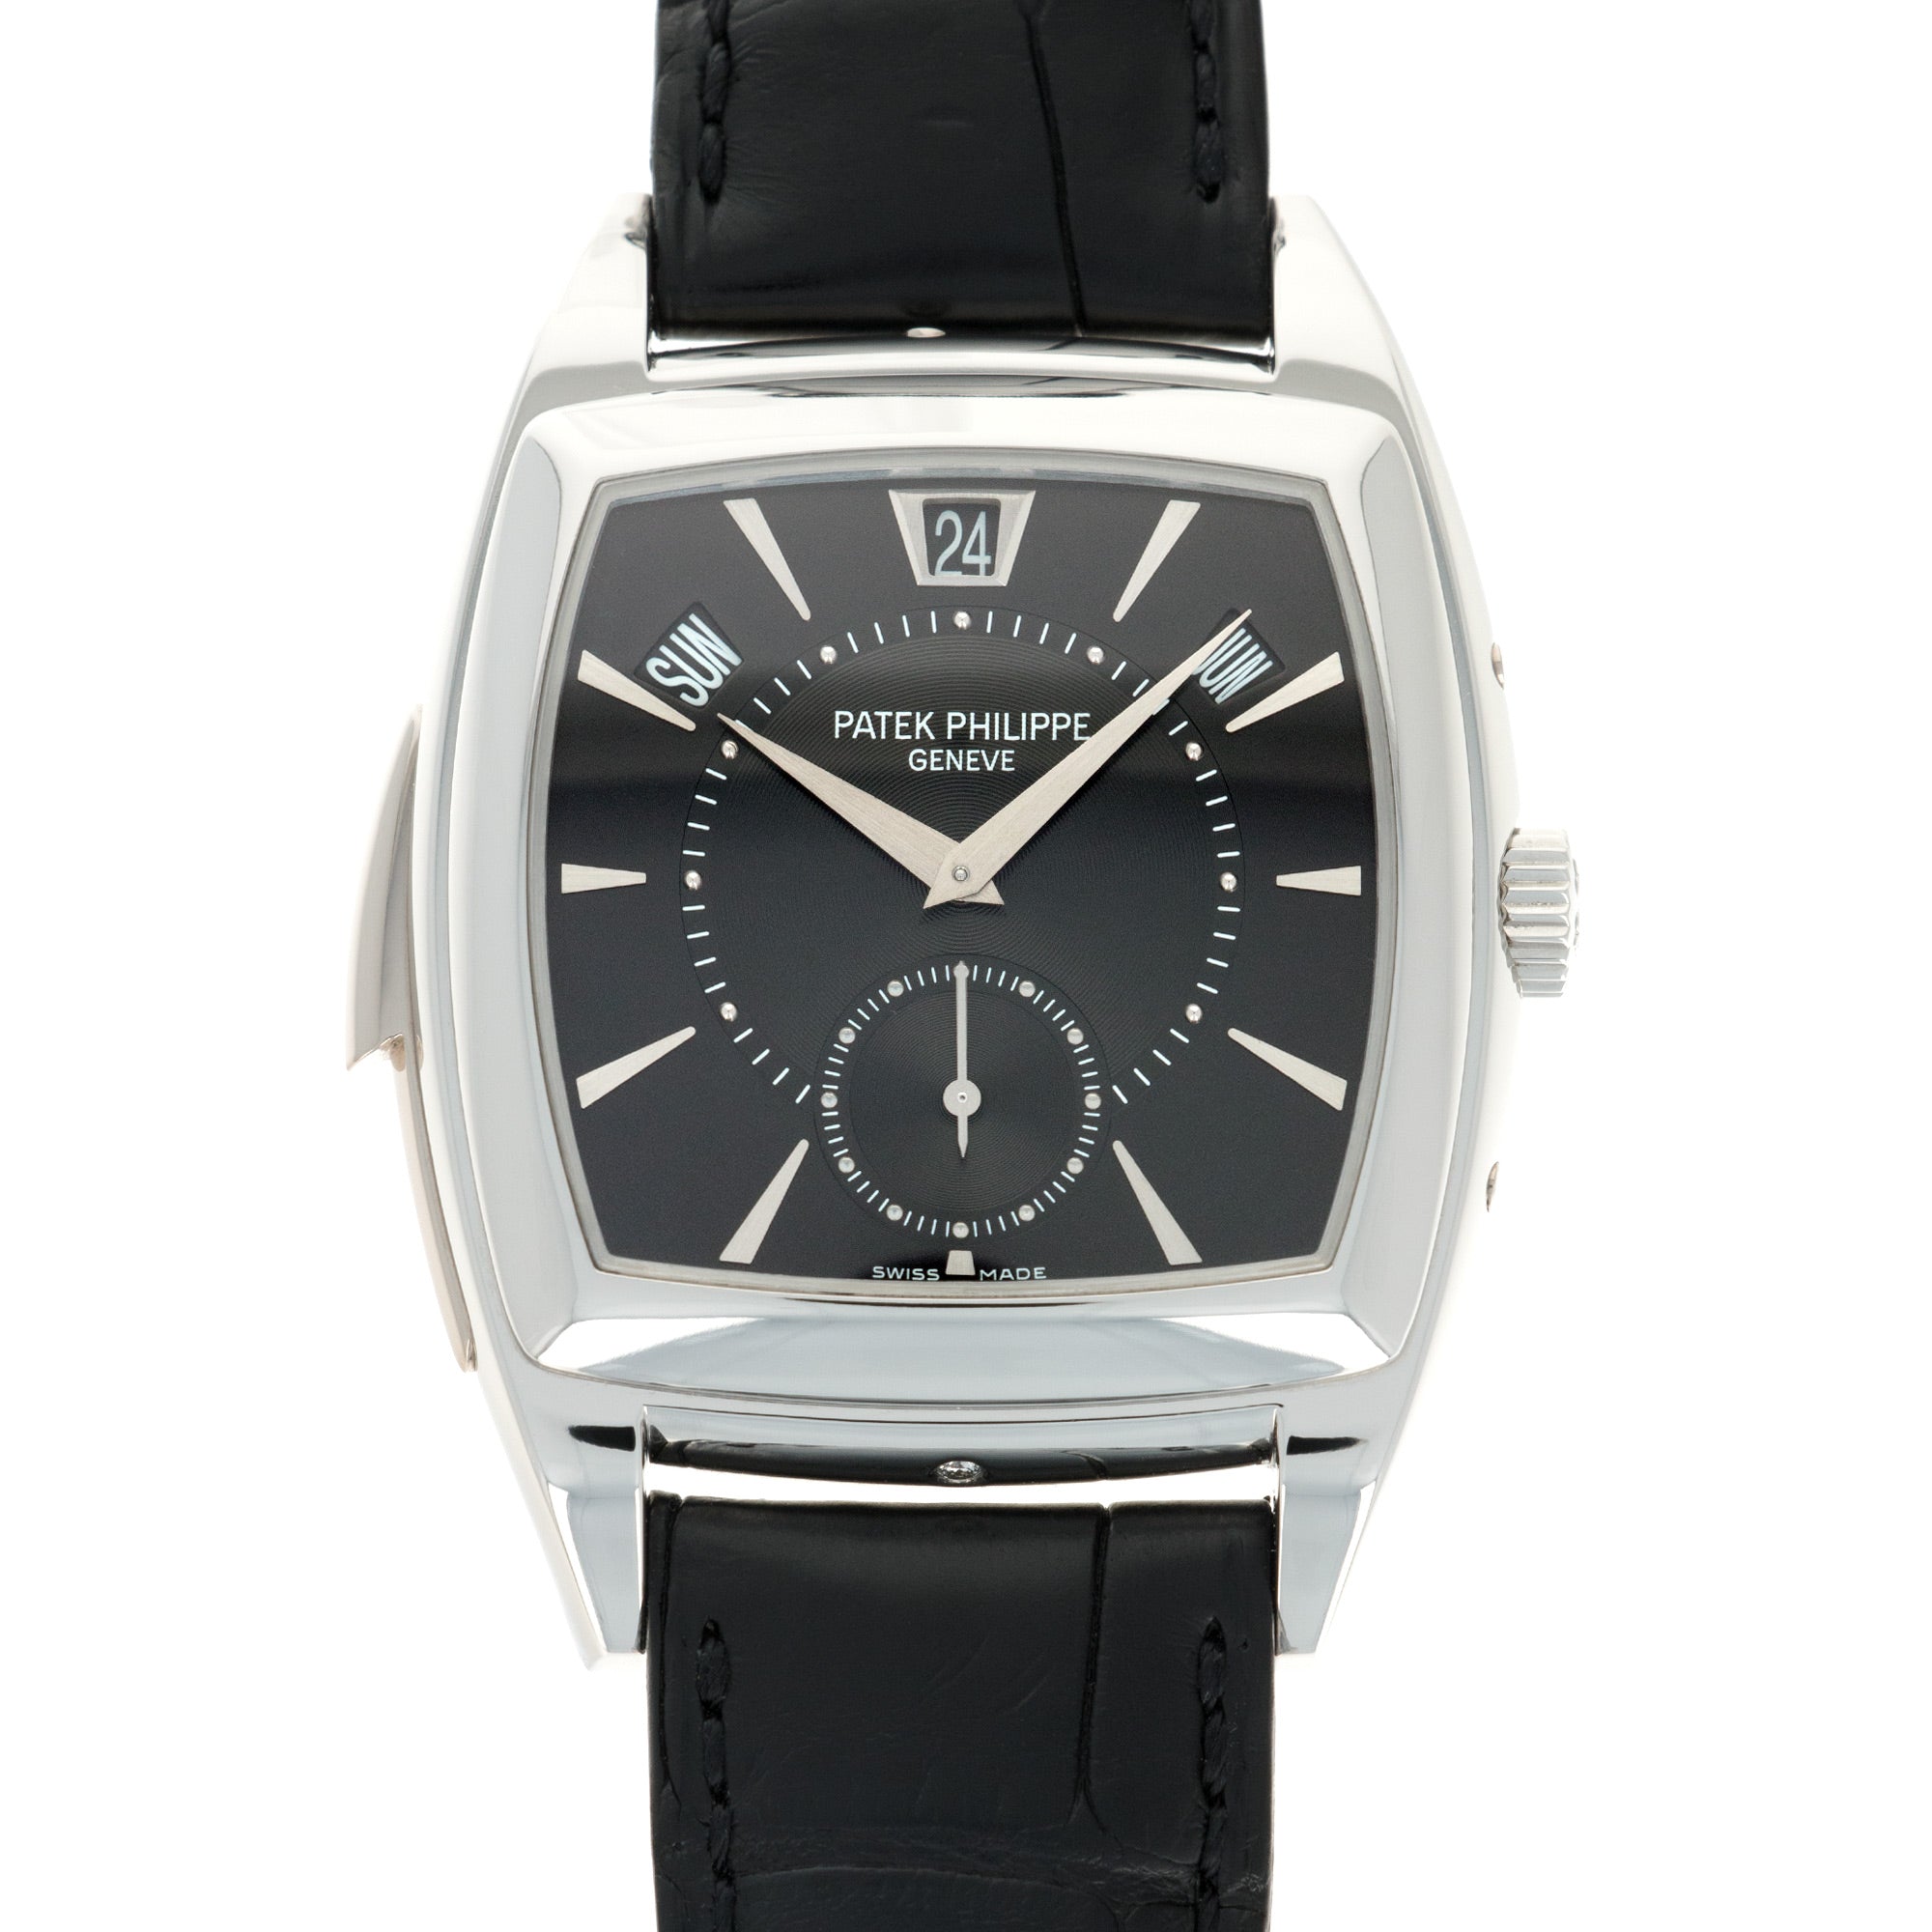 Patek Philippe - Patek Philippe Platinum Minute Repeater Watch Ref. 5033 - The Keystone Watches